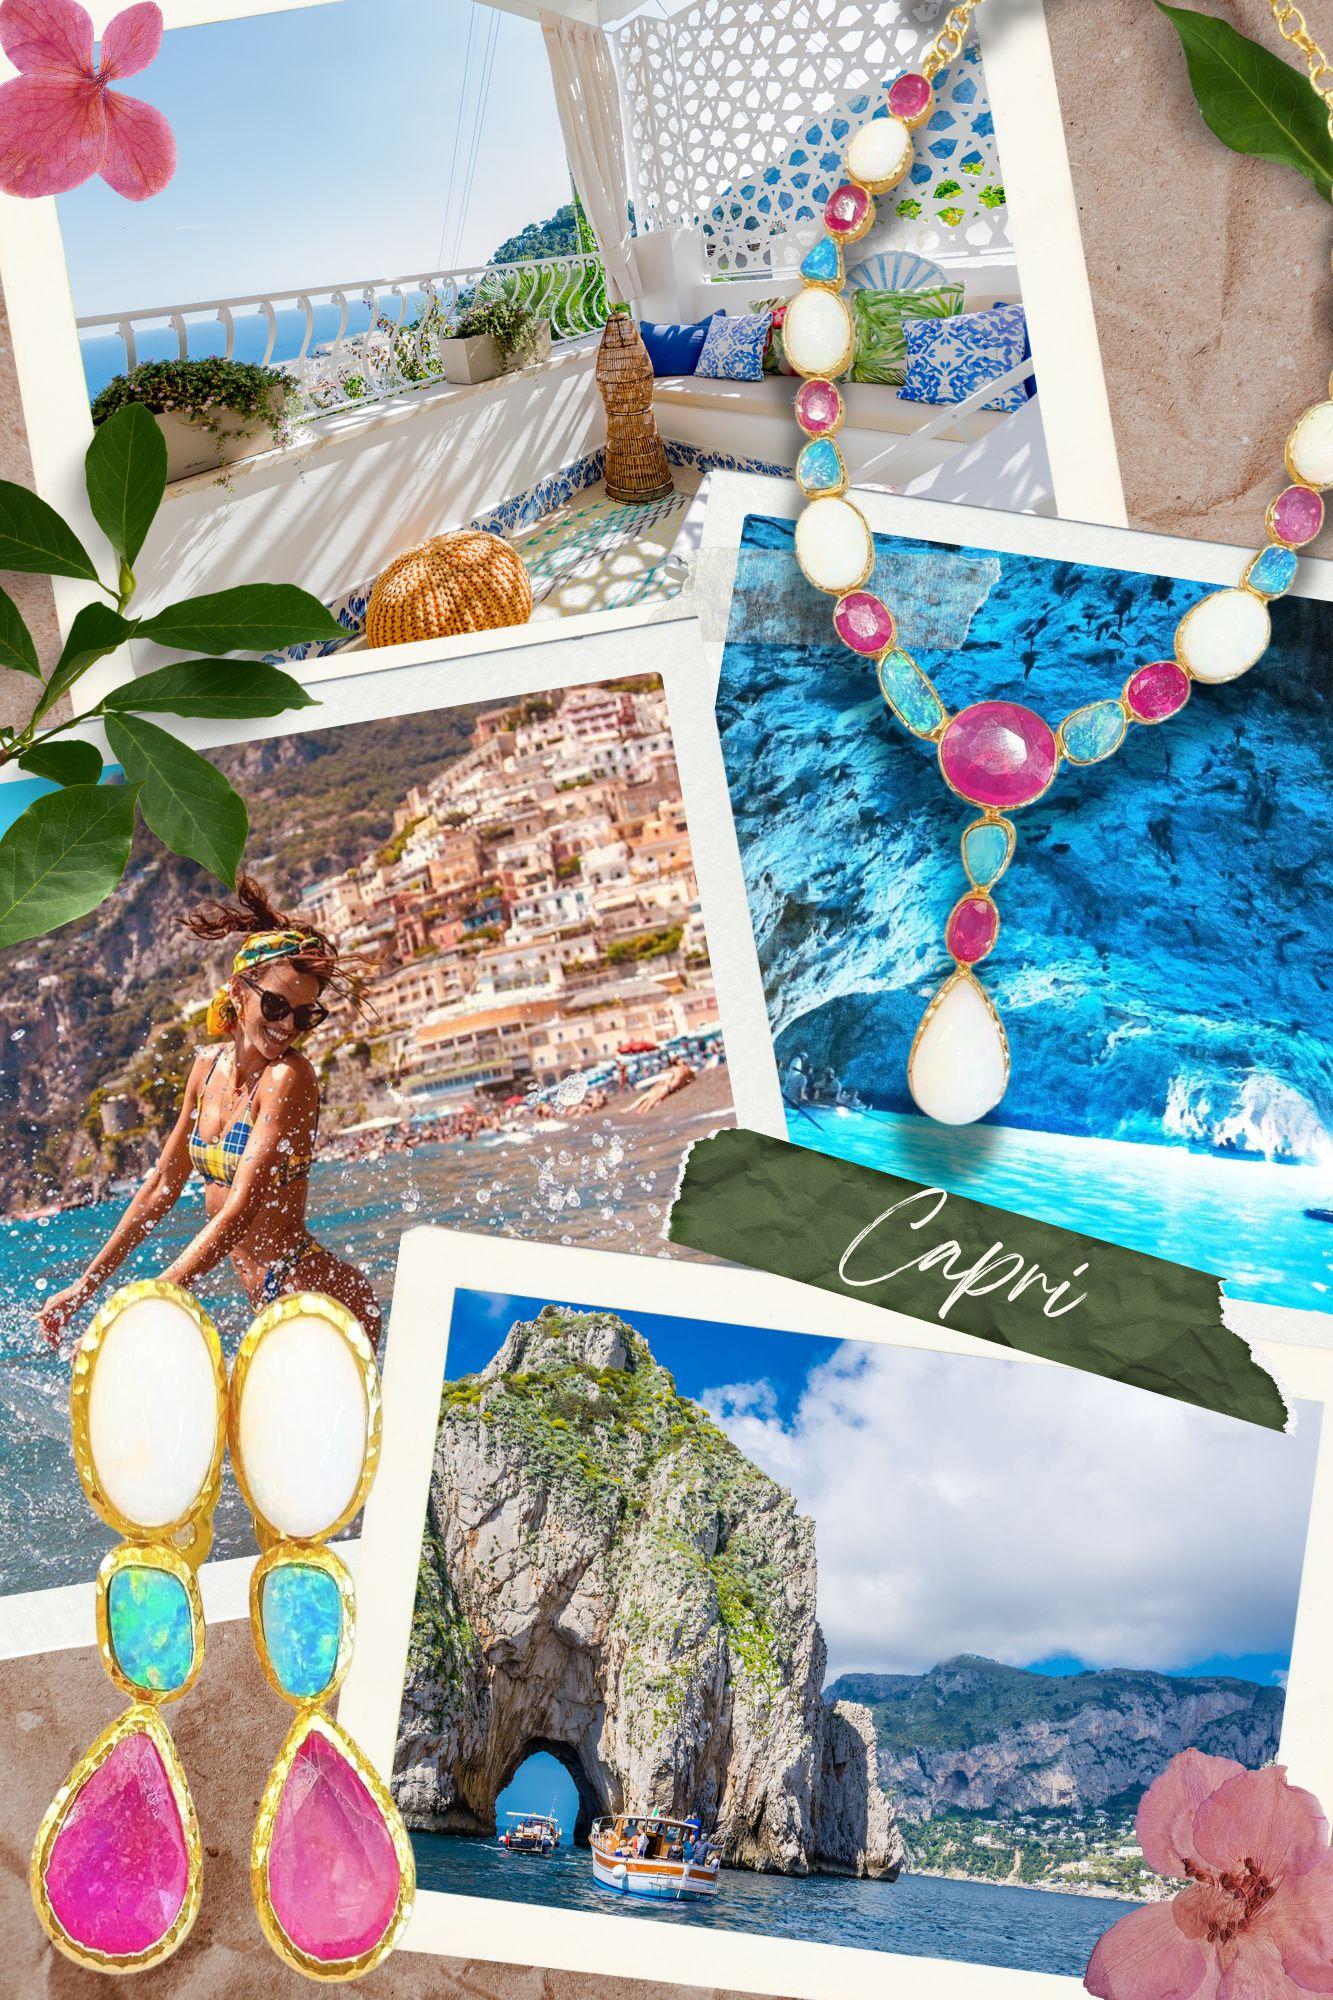 Bochic “Capri” Amethyst & Tourmaline, Pearl Brooch Set In 18K Gold & Silver  For Sale 6